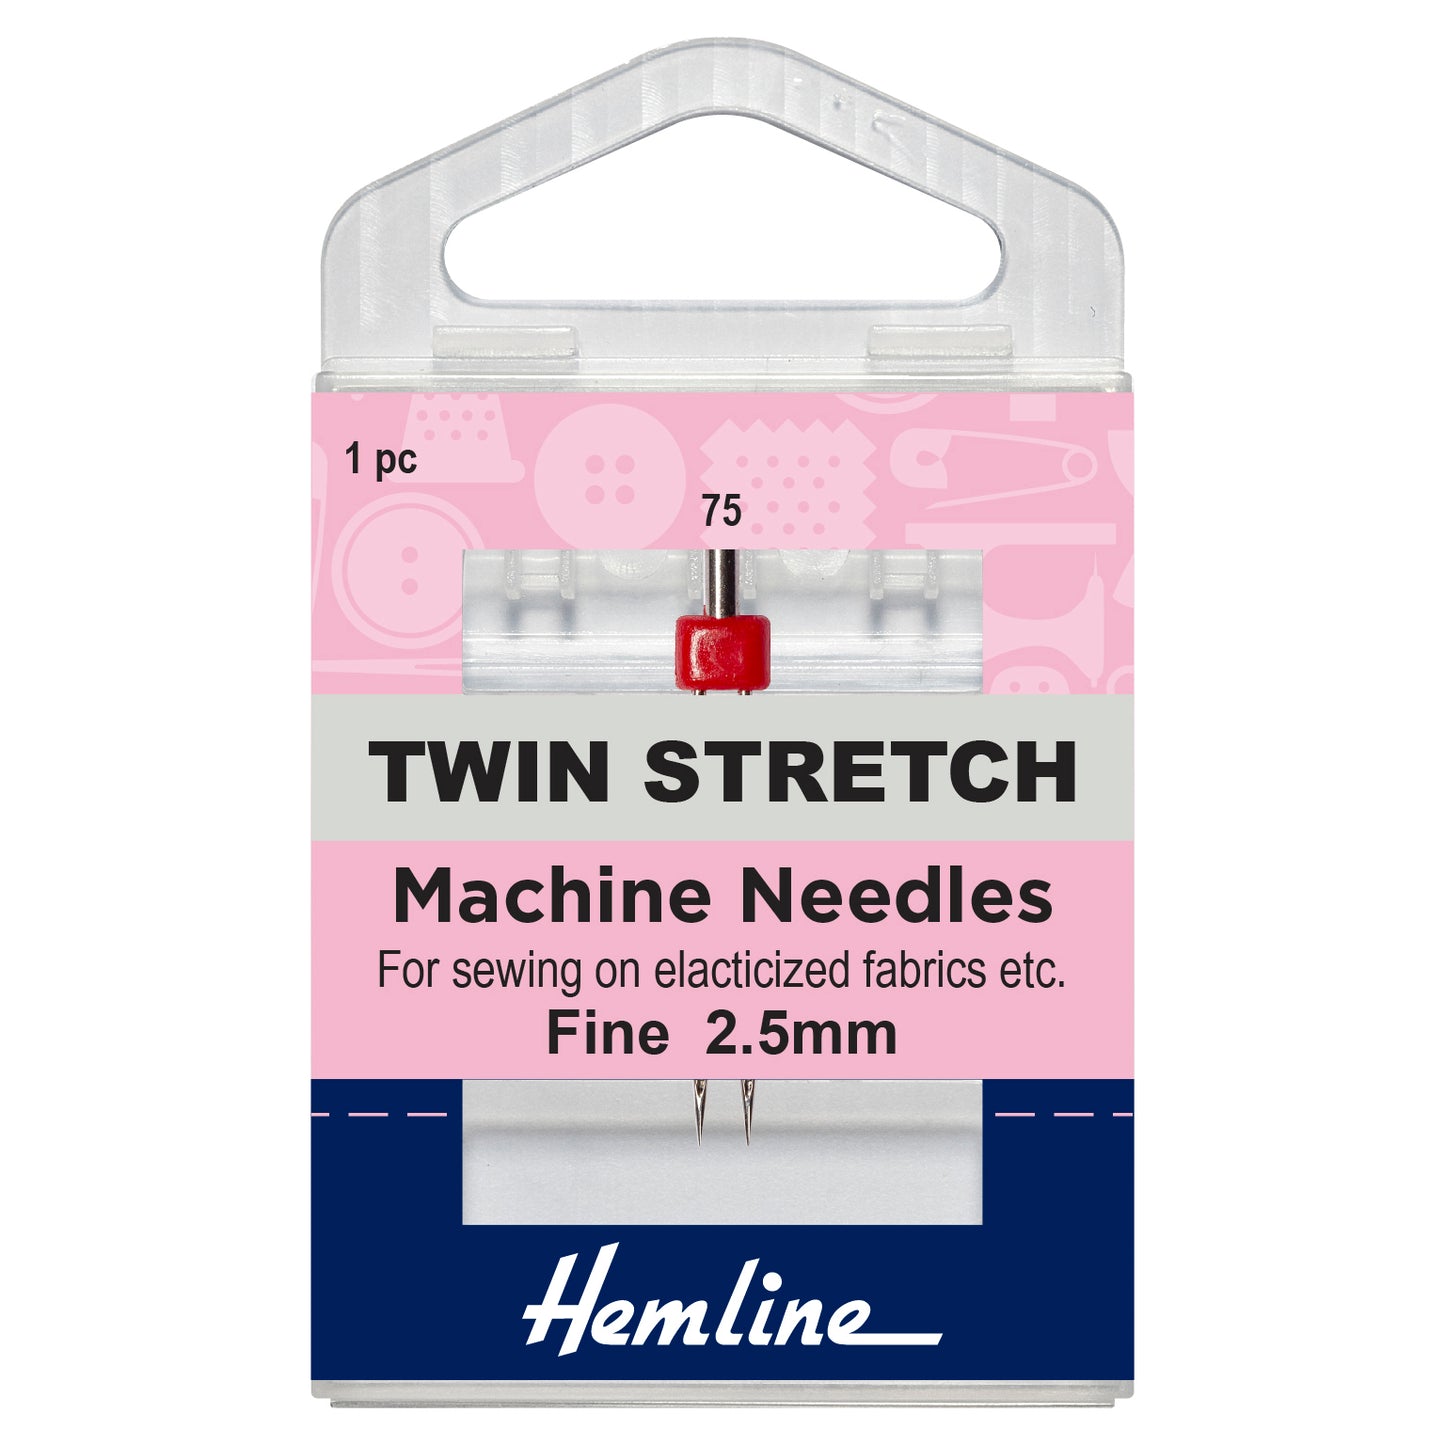 Sewing Machine Needles: Twin Stretch: 75/11, 2.5mm: 1 Piece